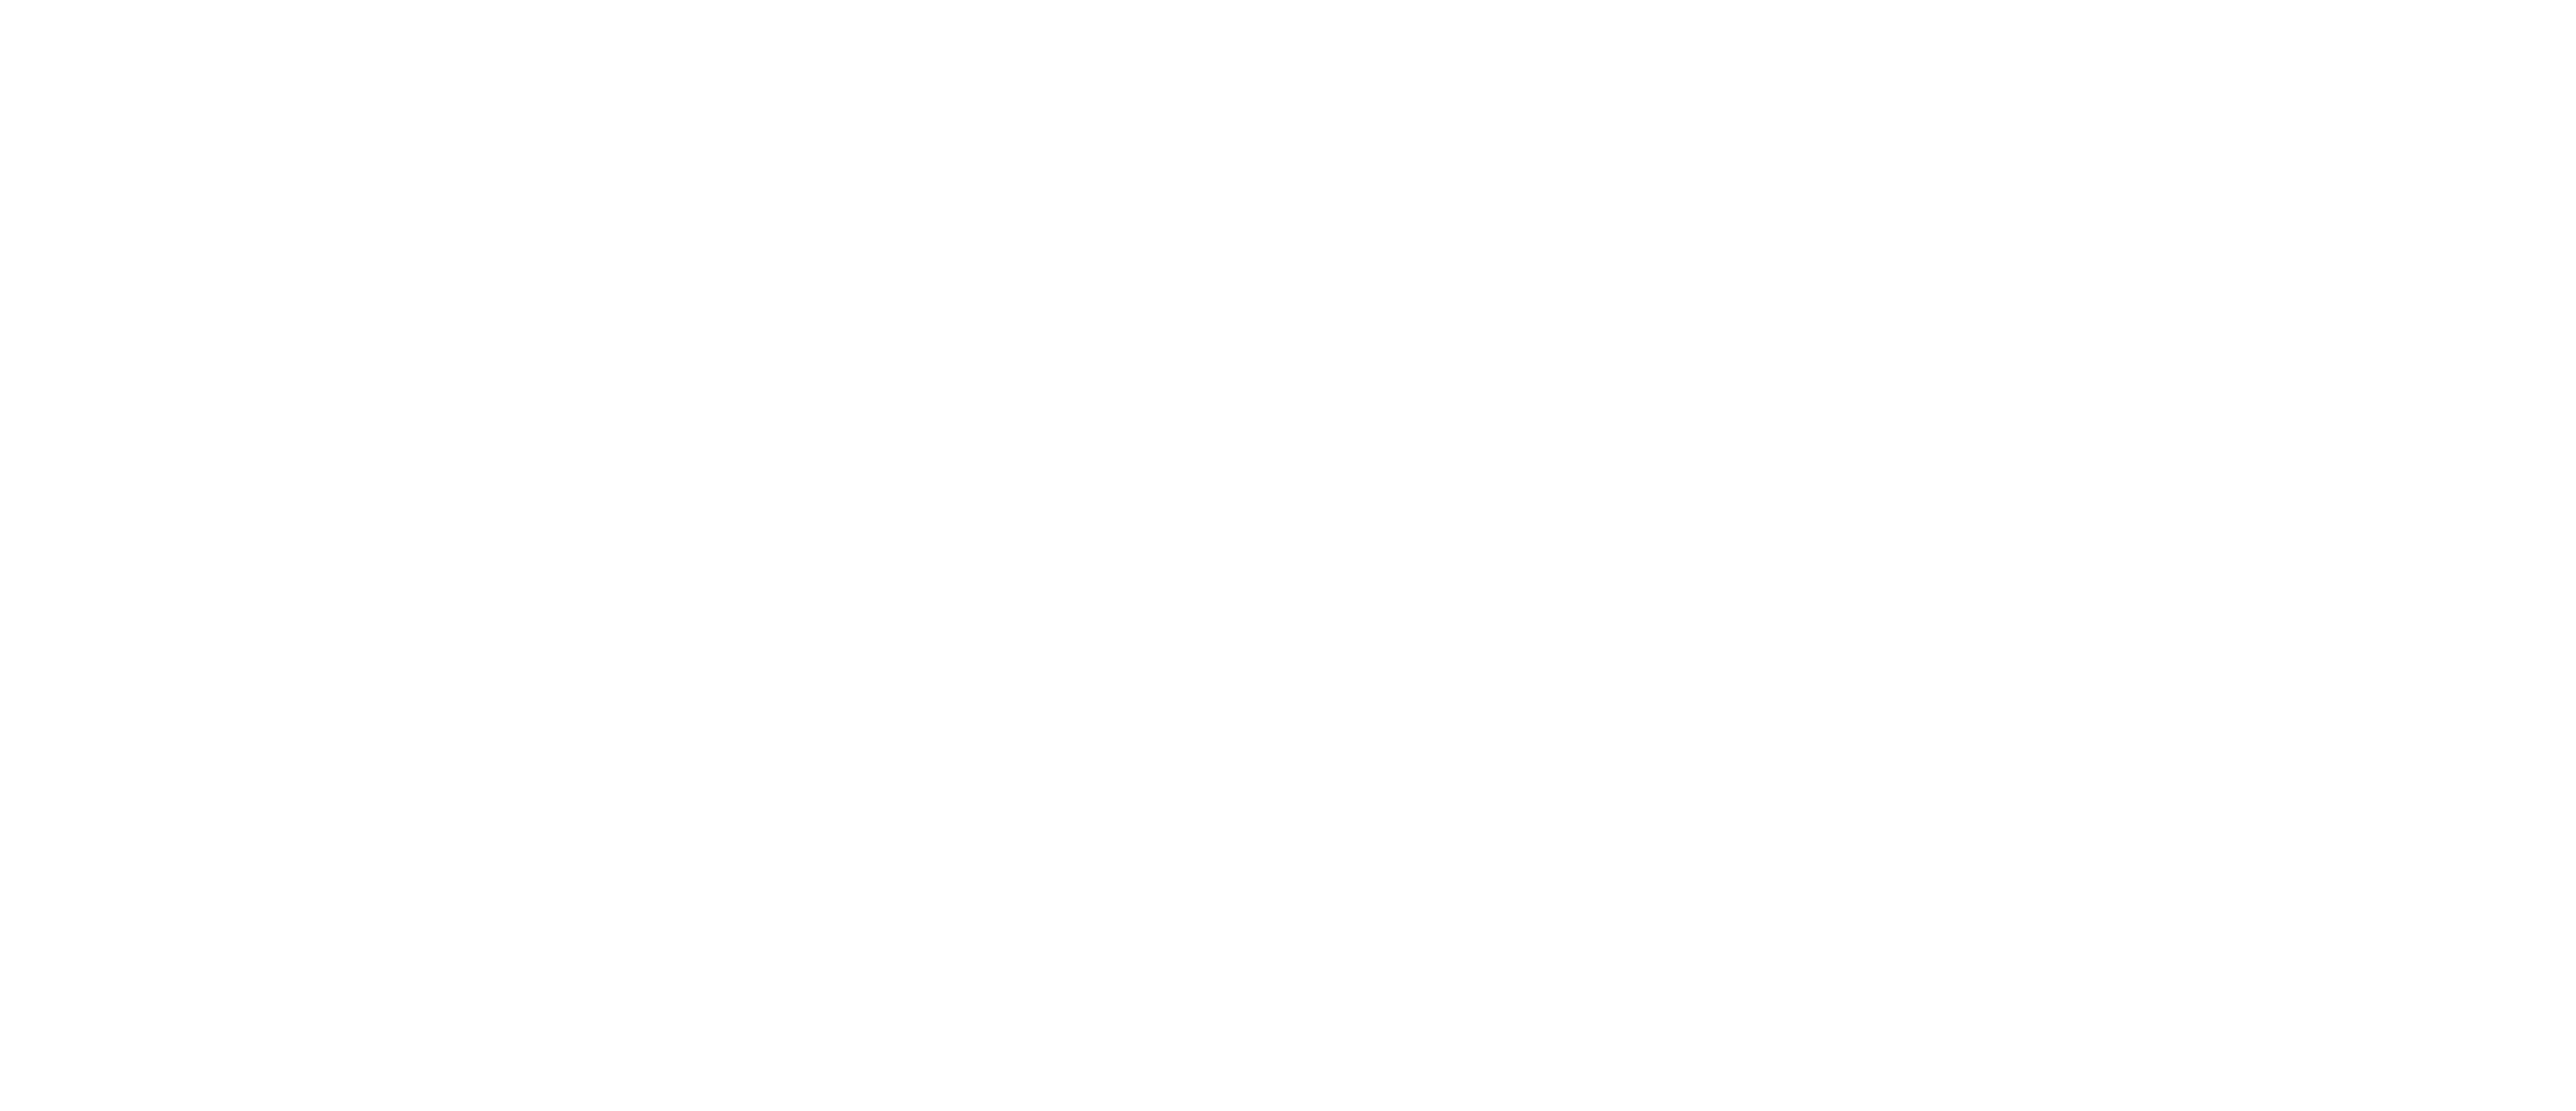 Saddledome Live logo in white